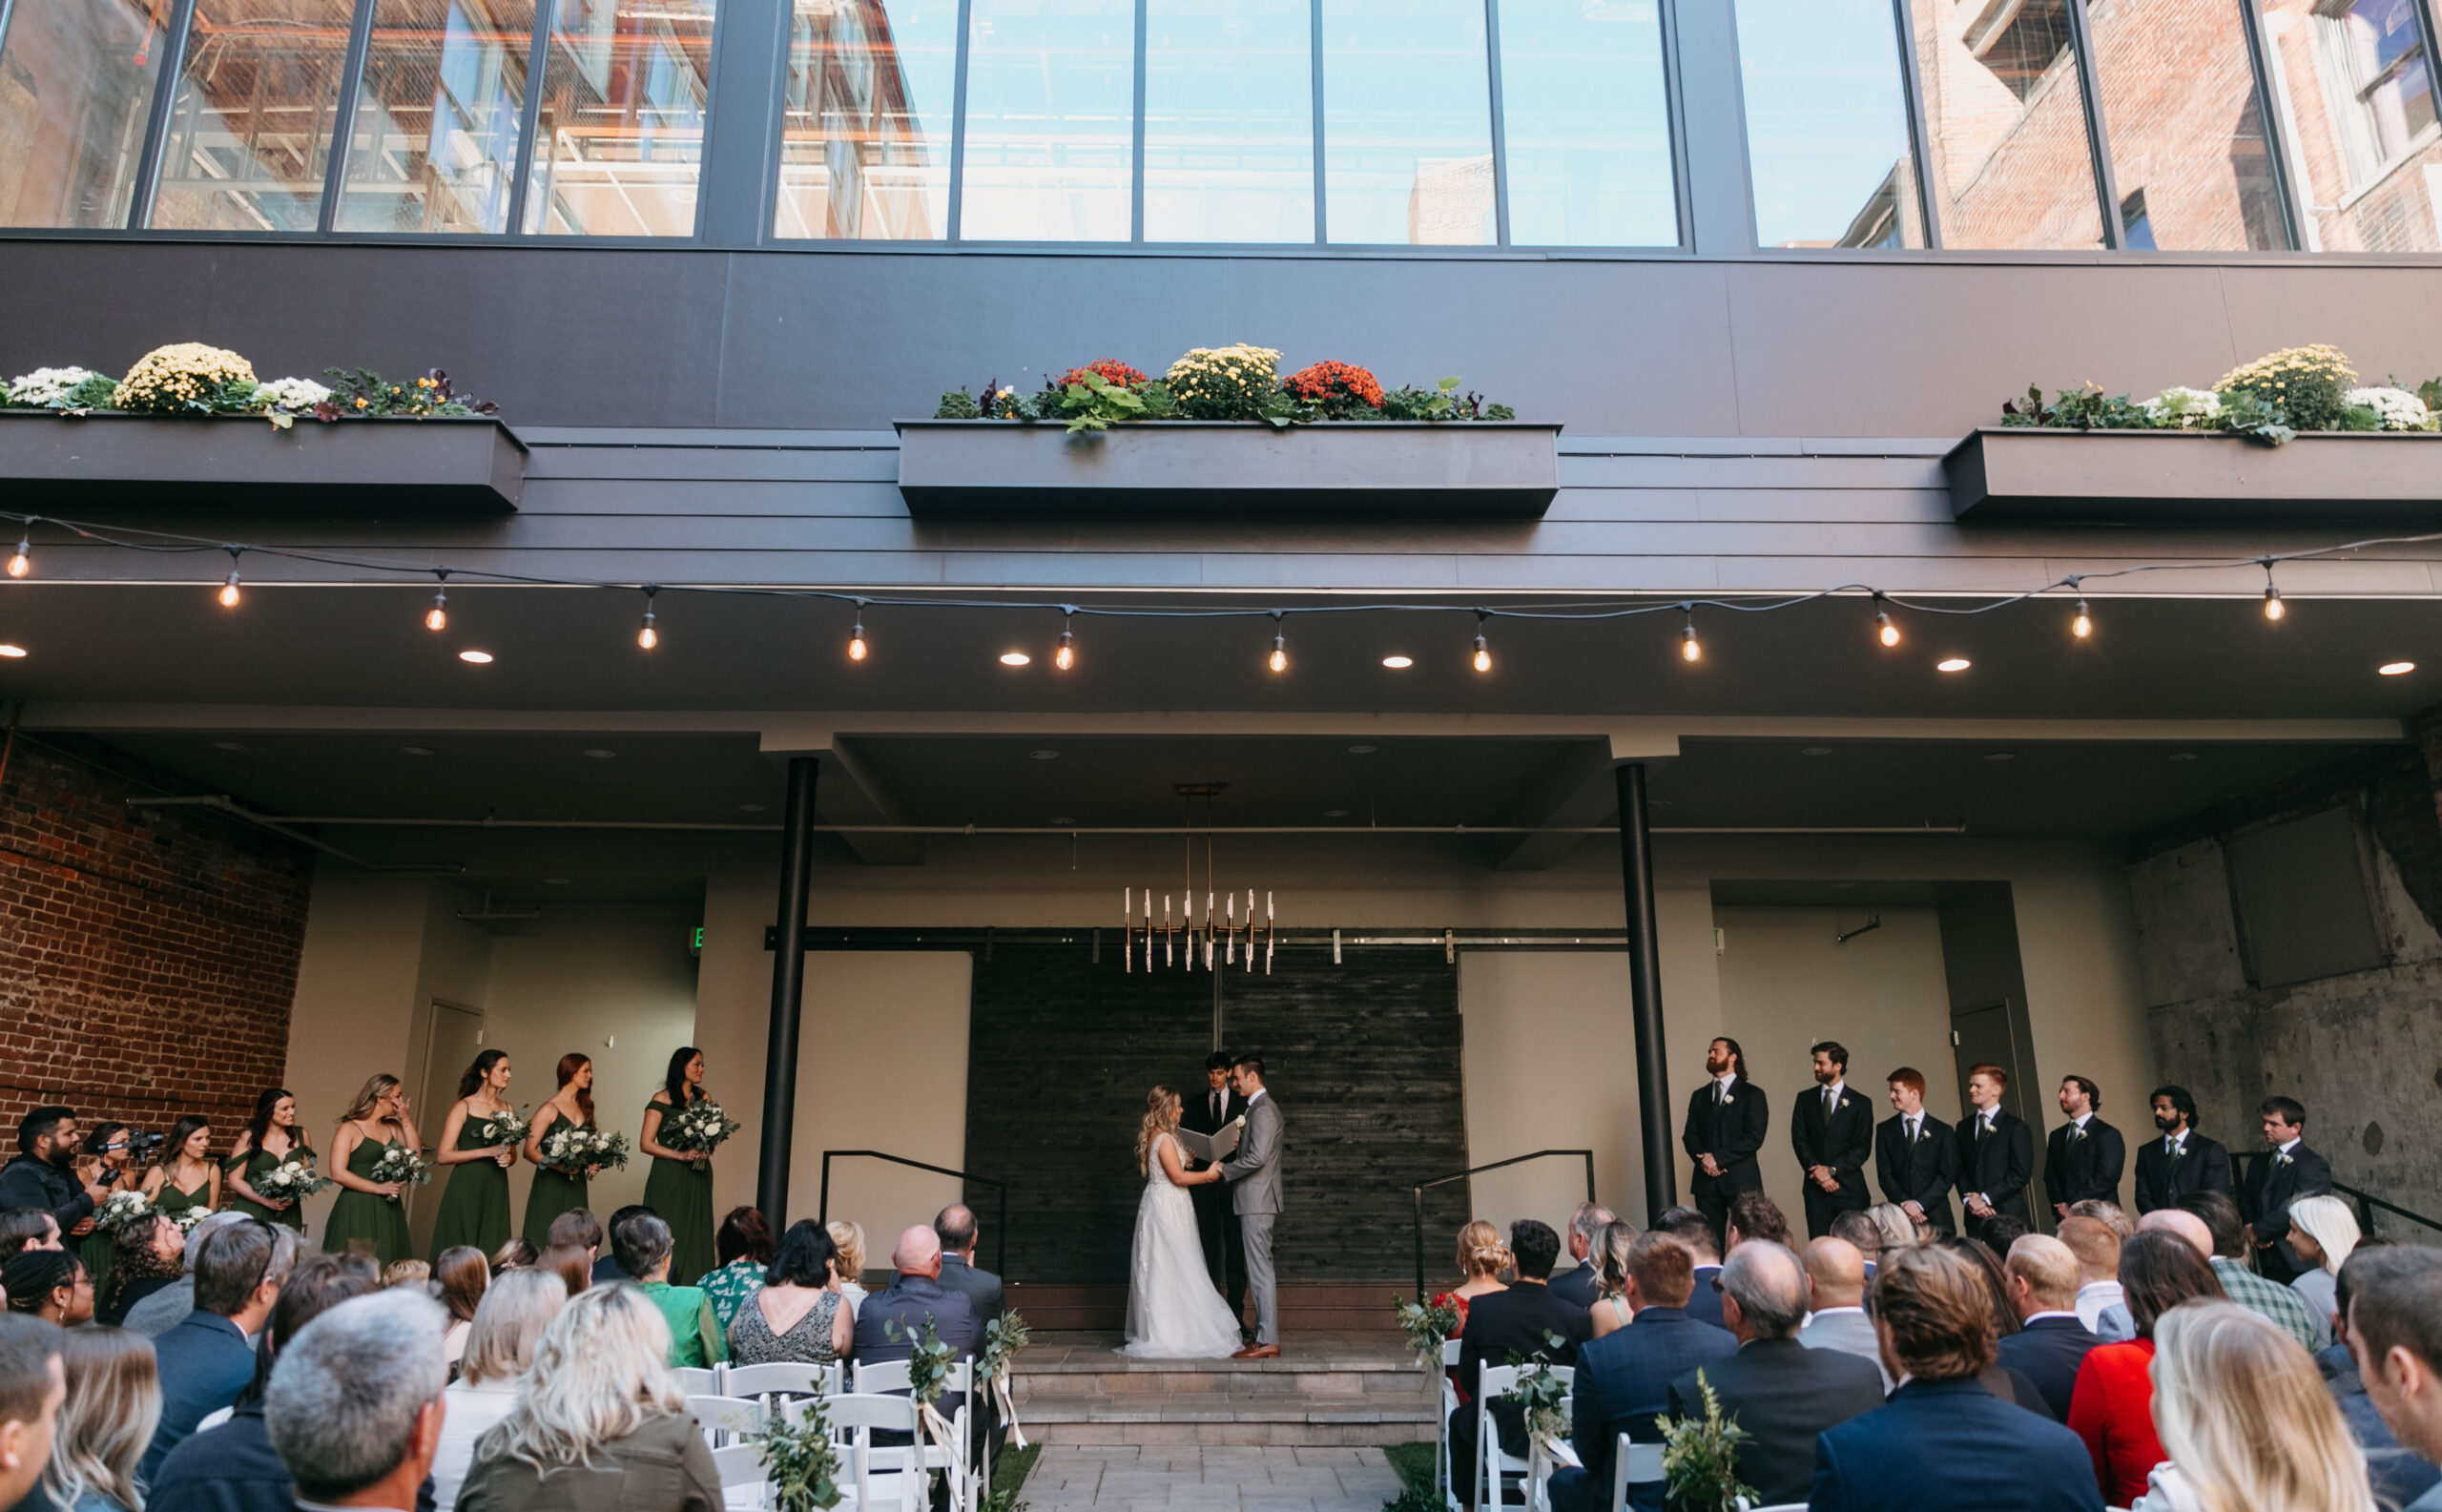 Wedding ceremony at Hotel covington courtyard.